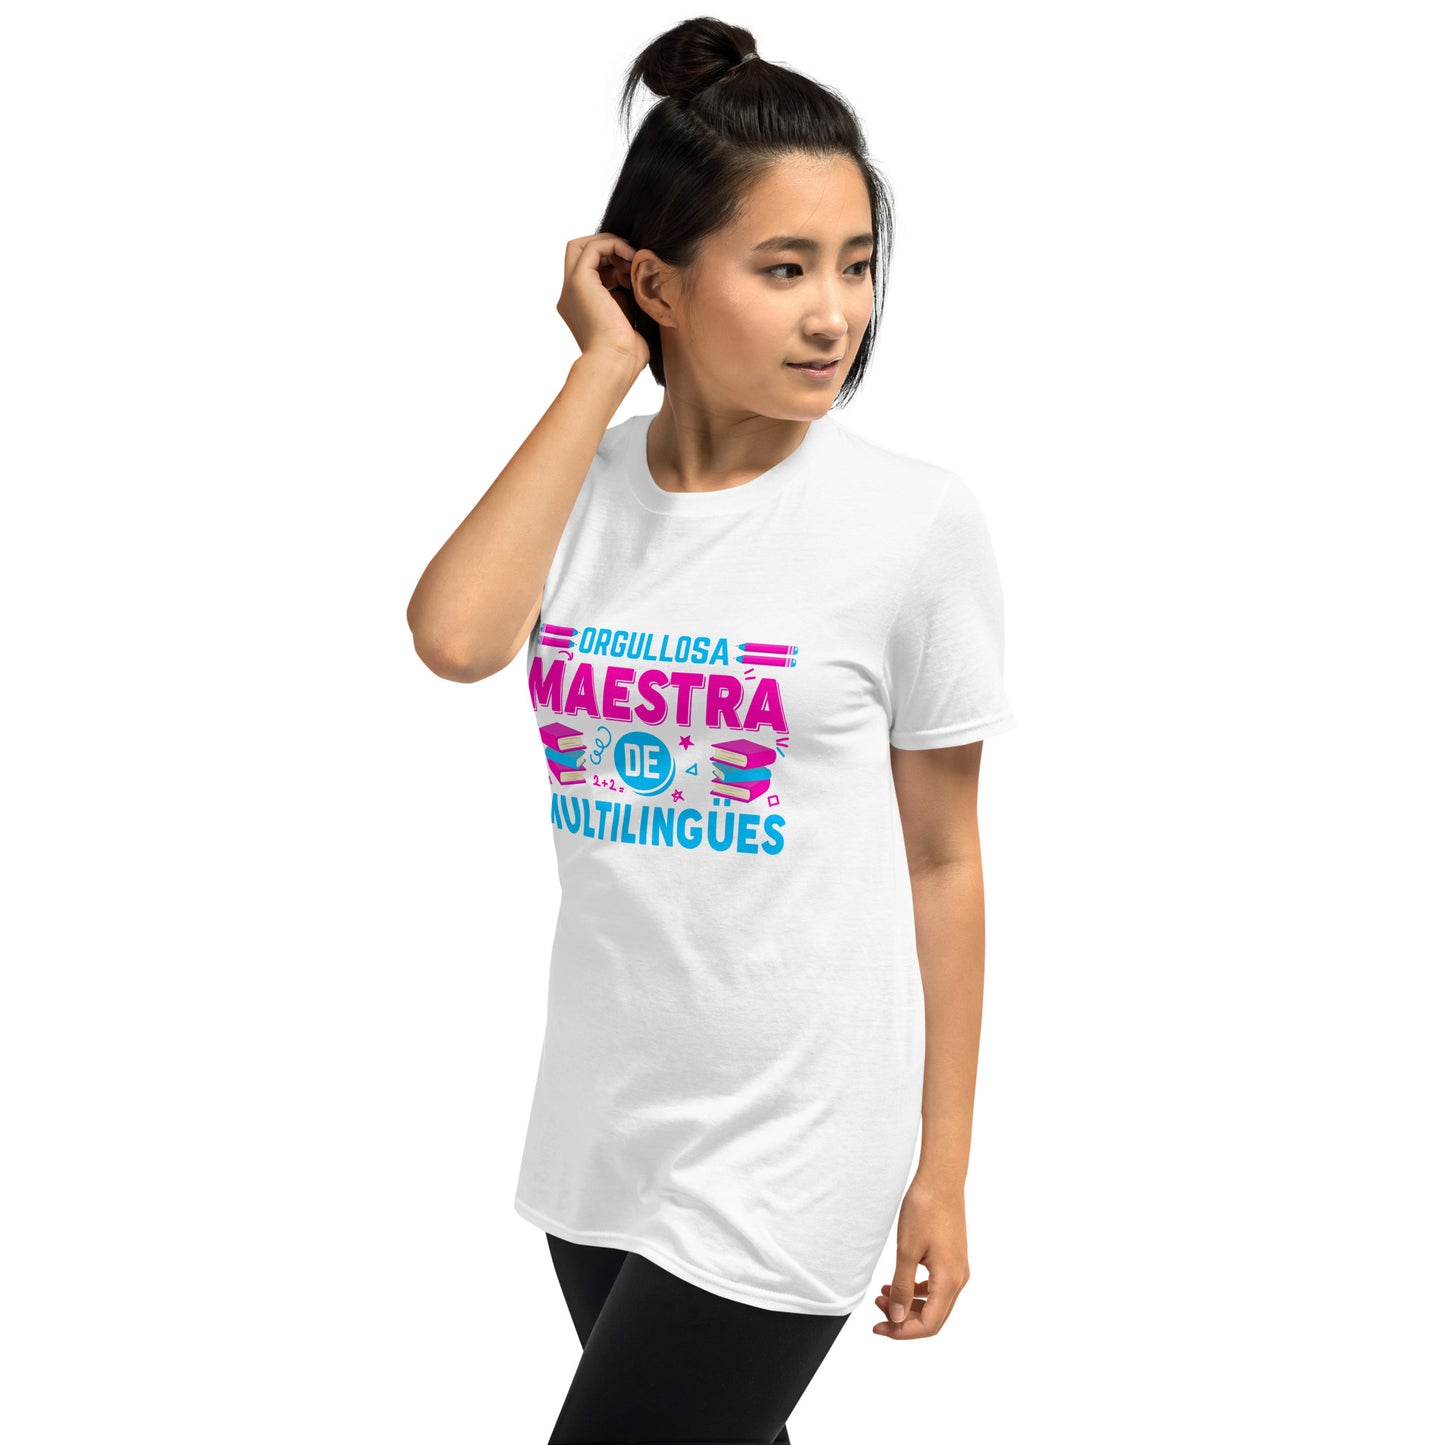 Orgullosa Maestra de Multilingües T-Shirt